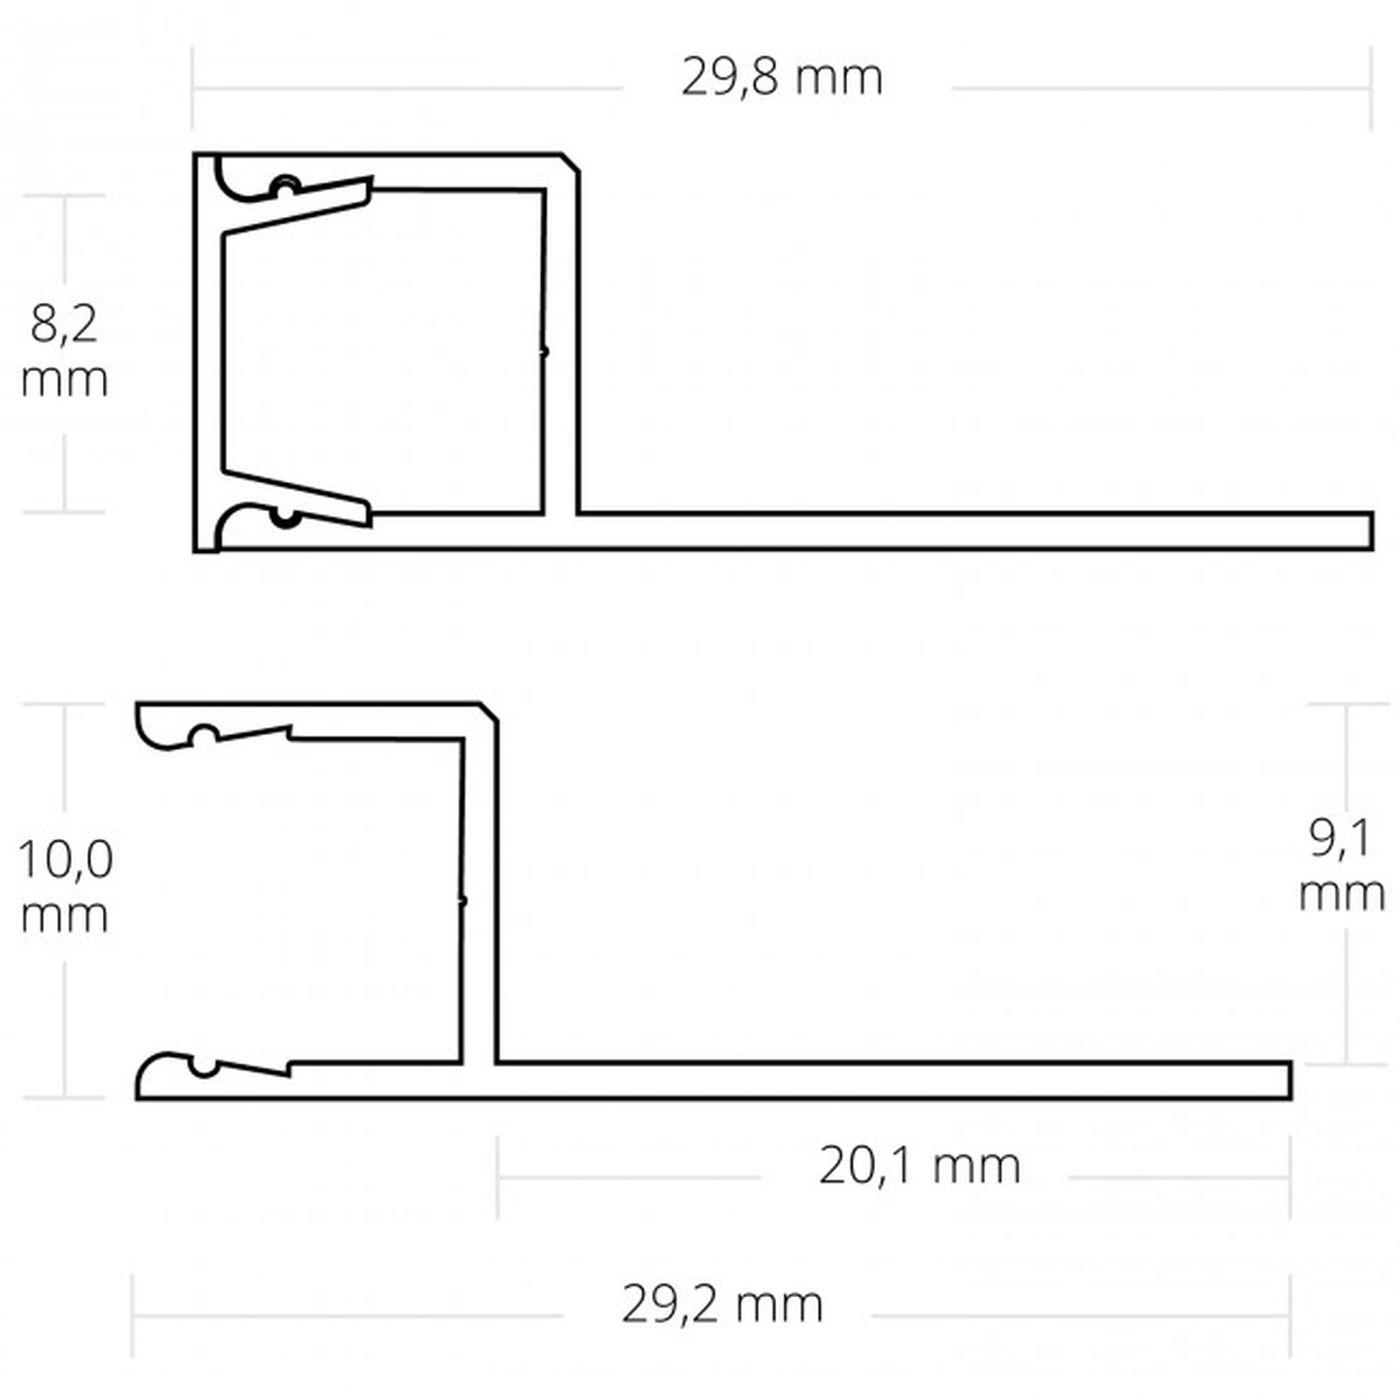 2m LED profile FP4 Silver 33x12mm Aluminium Tile profile for 10mm LED strips